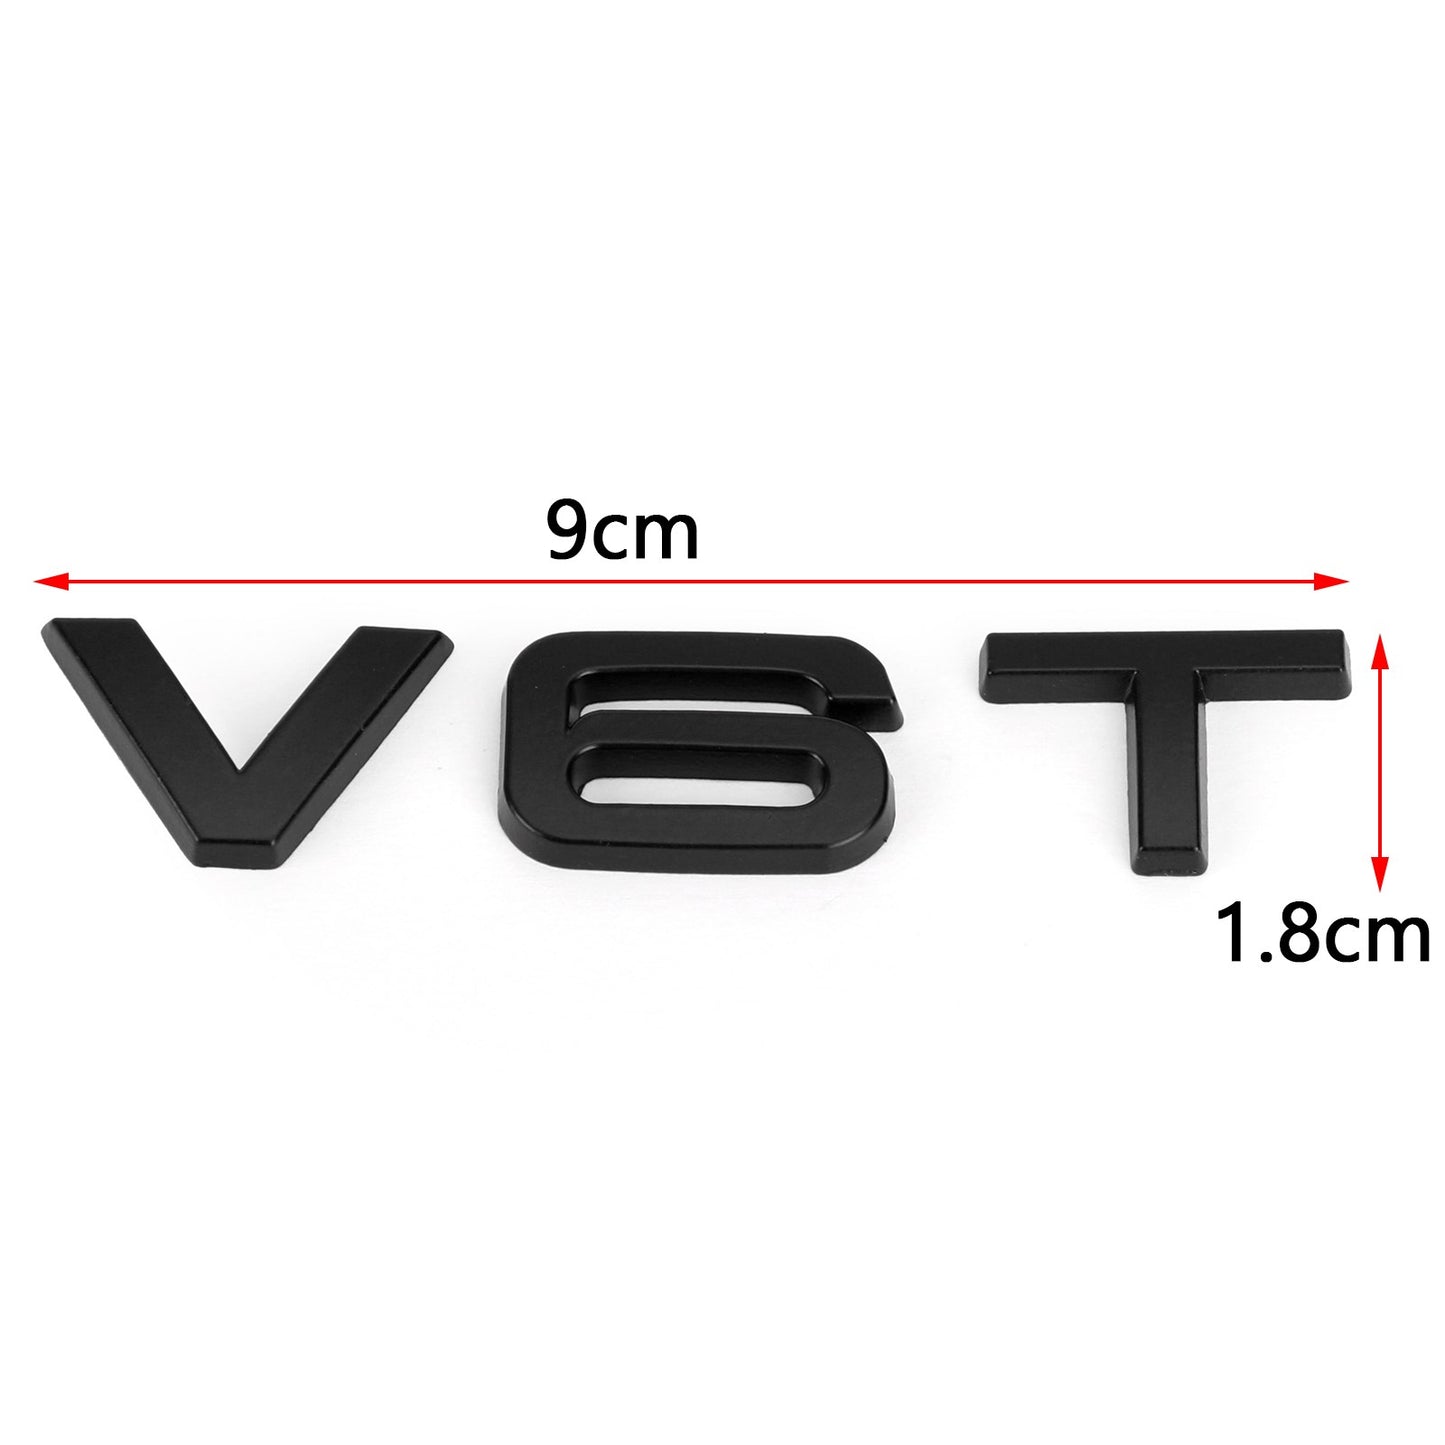 V6T Emblem Abzeichen passend für Audi A1 A3 A4 A5 A6 A7 Q3 Q5 Q7 S7 S7 S8 S4 Sq5 Schwarz